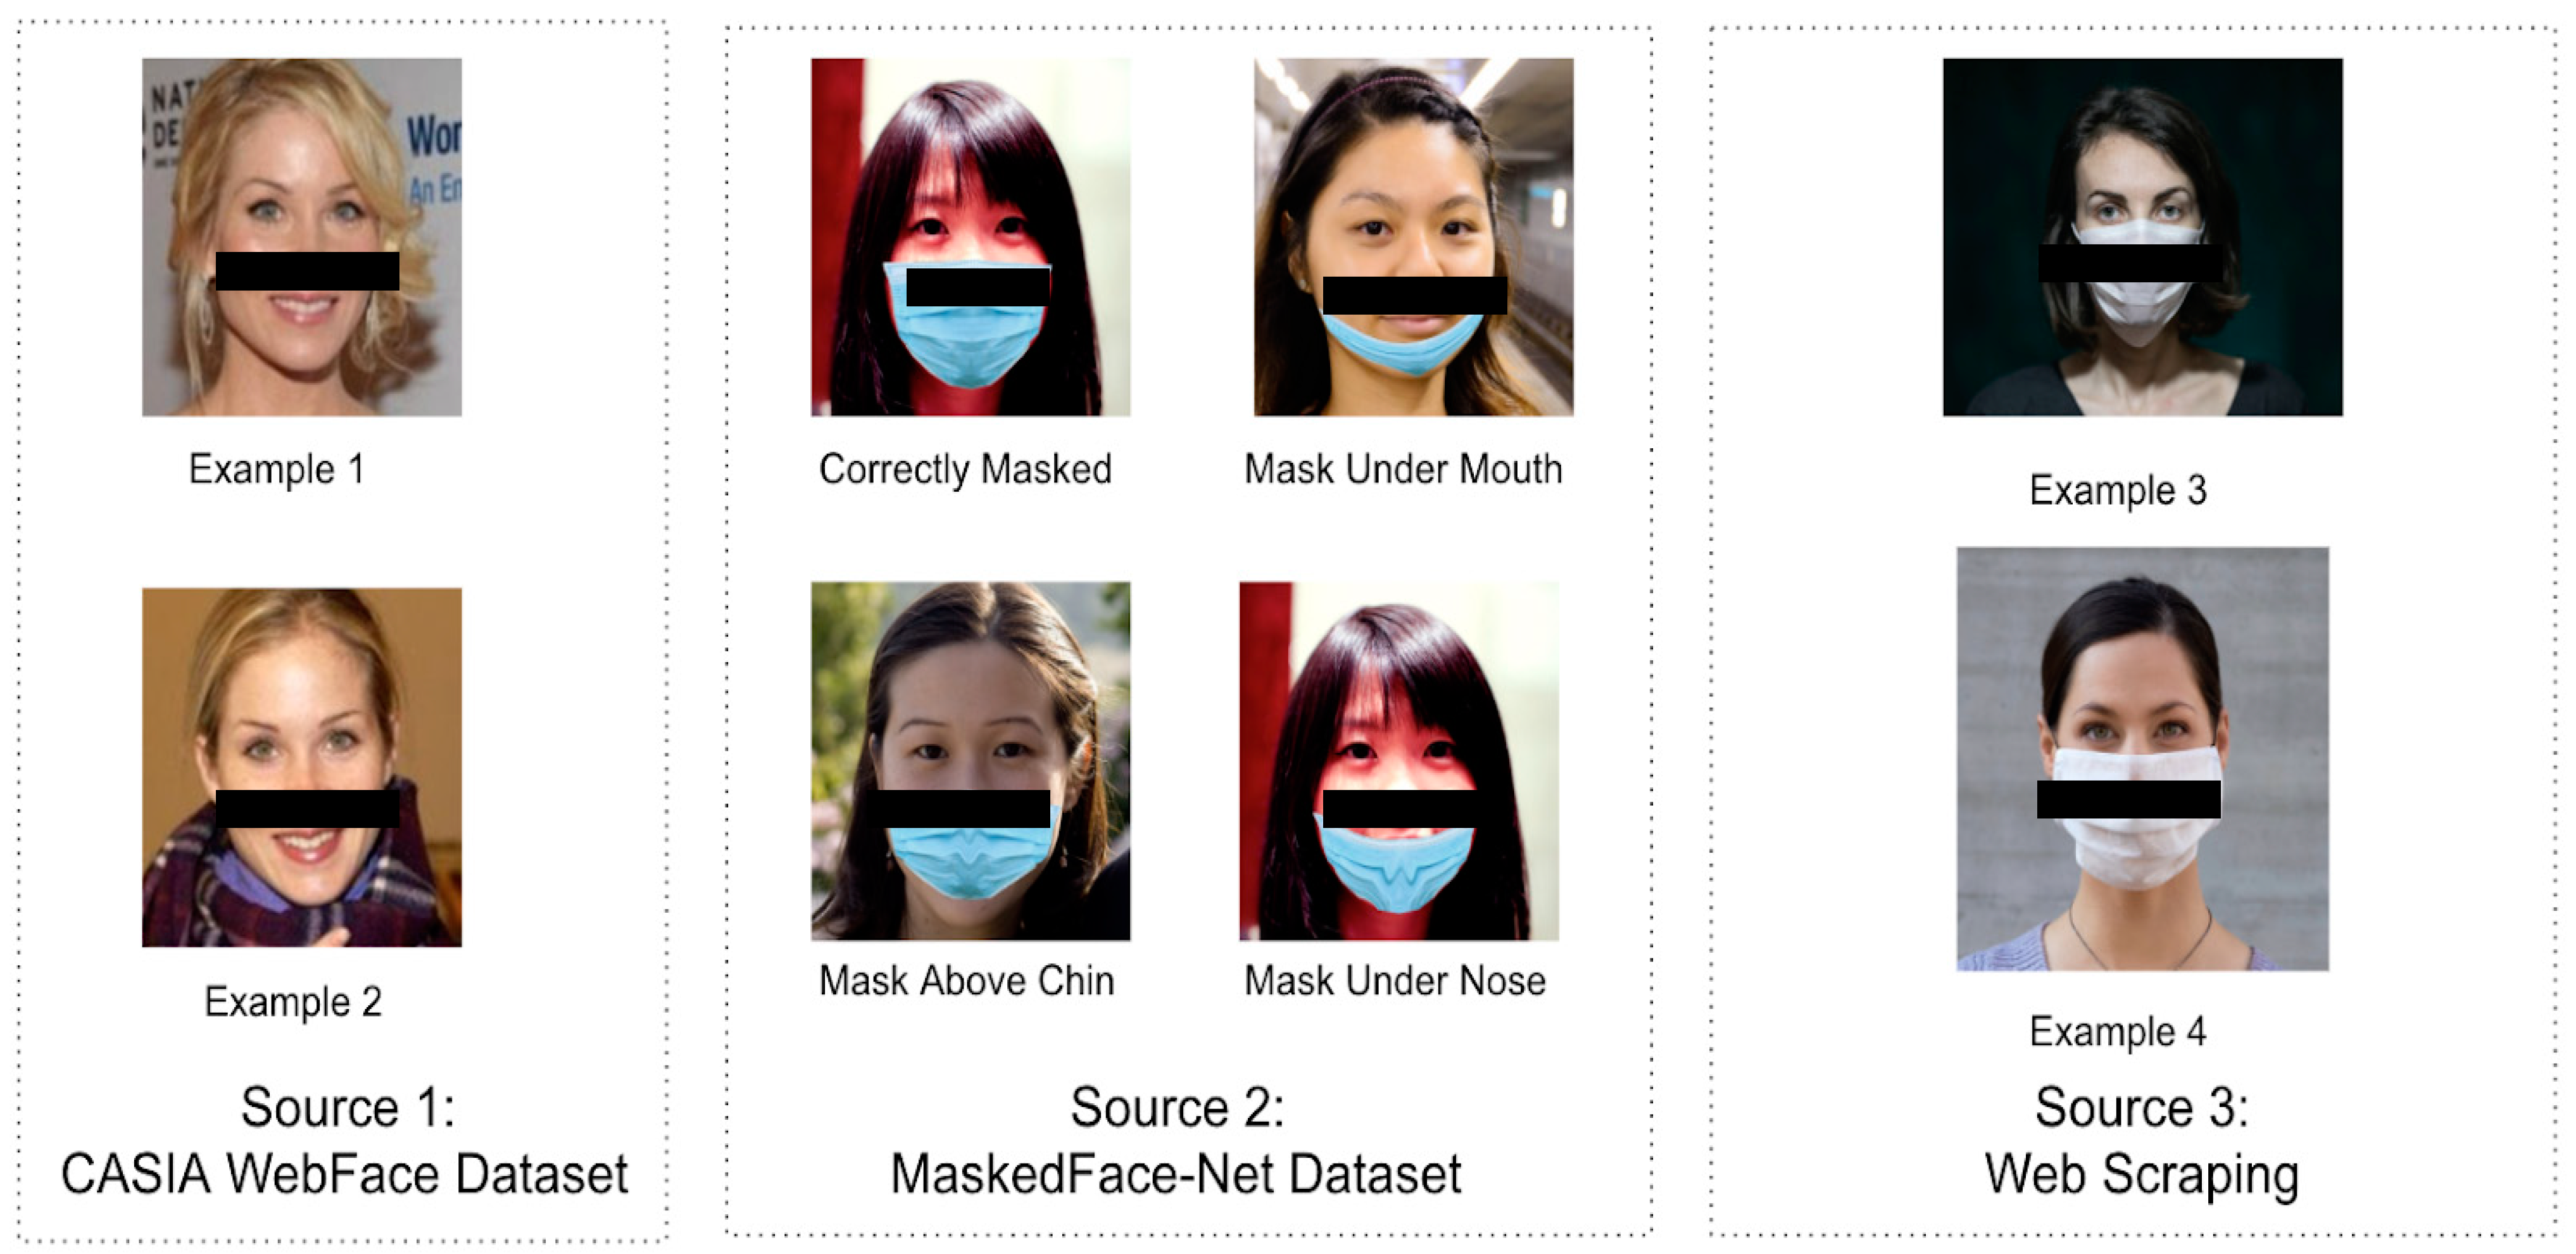 DIY Corona Mask Organiser, Mask Holder, Face mask Stand, How to